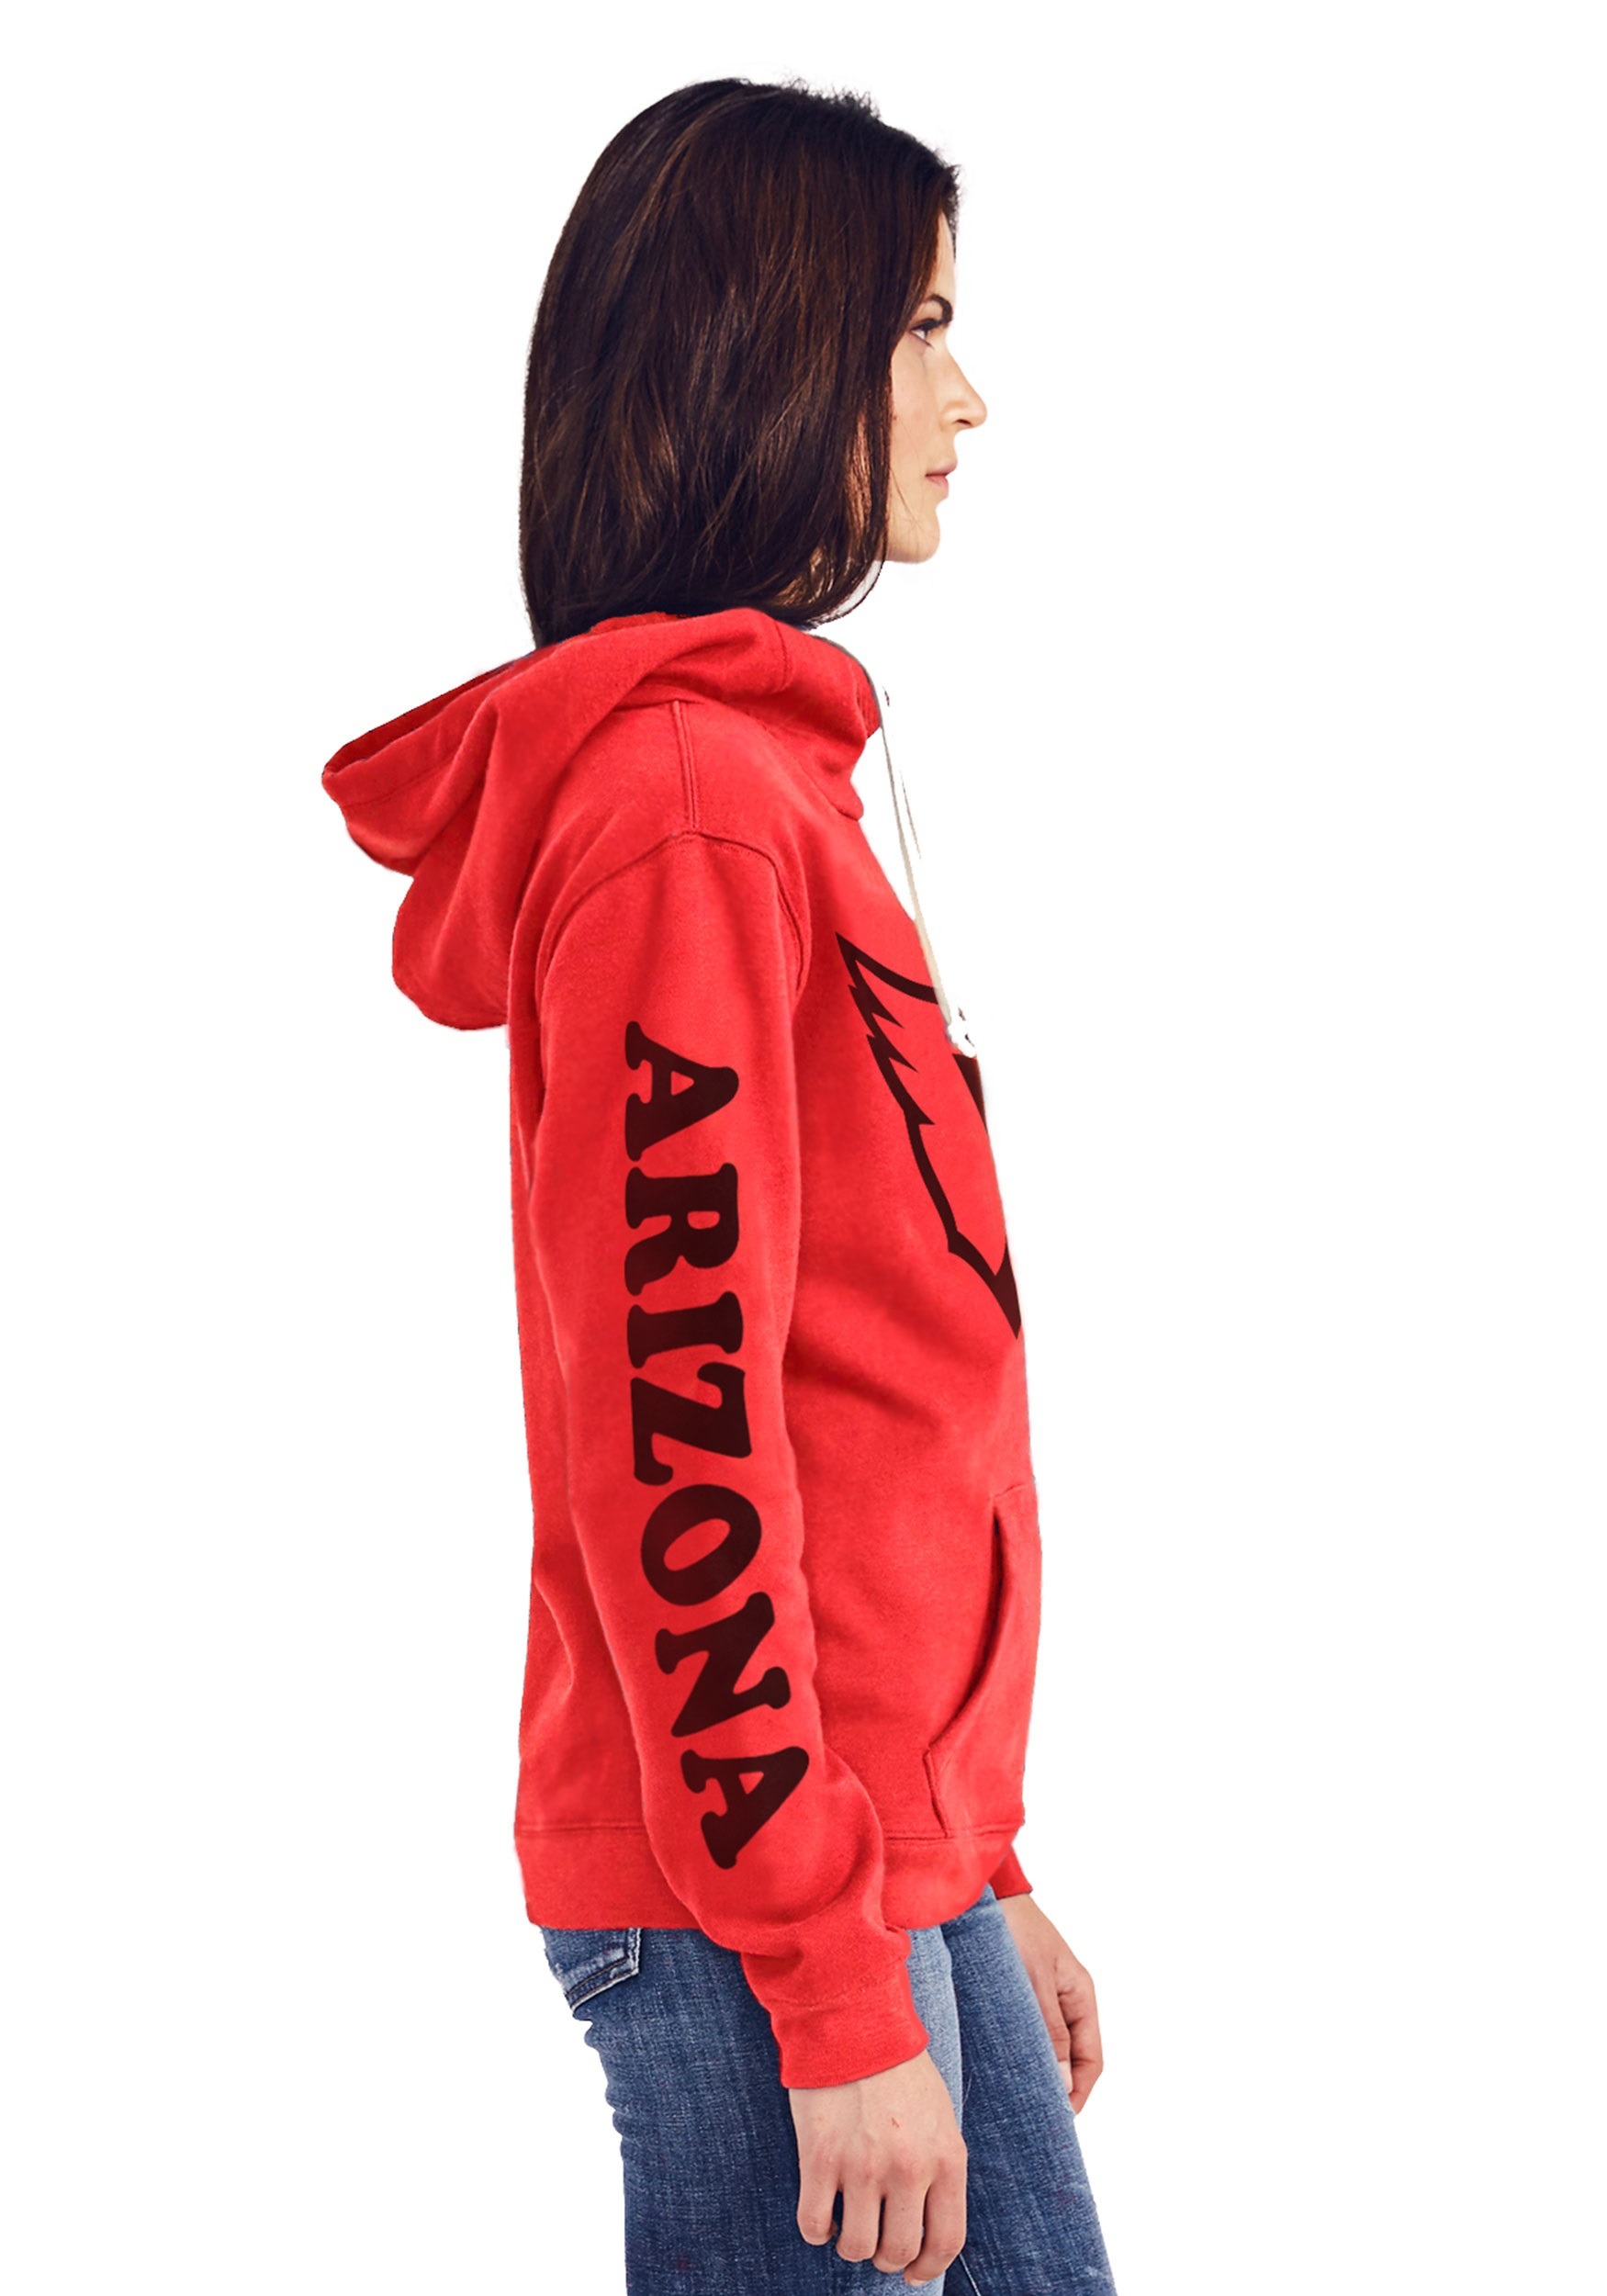 women's arizona cardinals hoodie